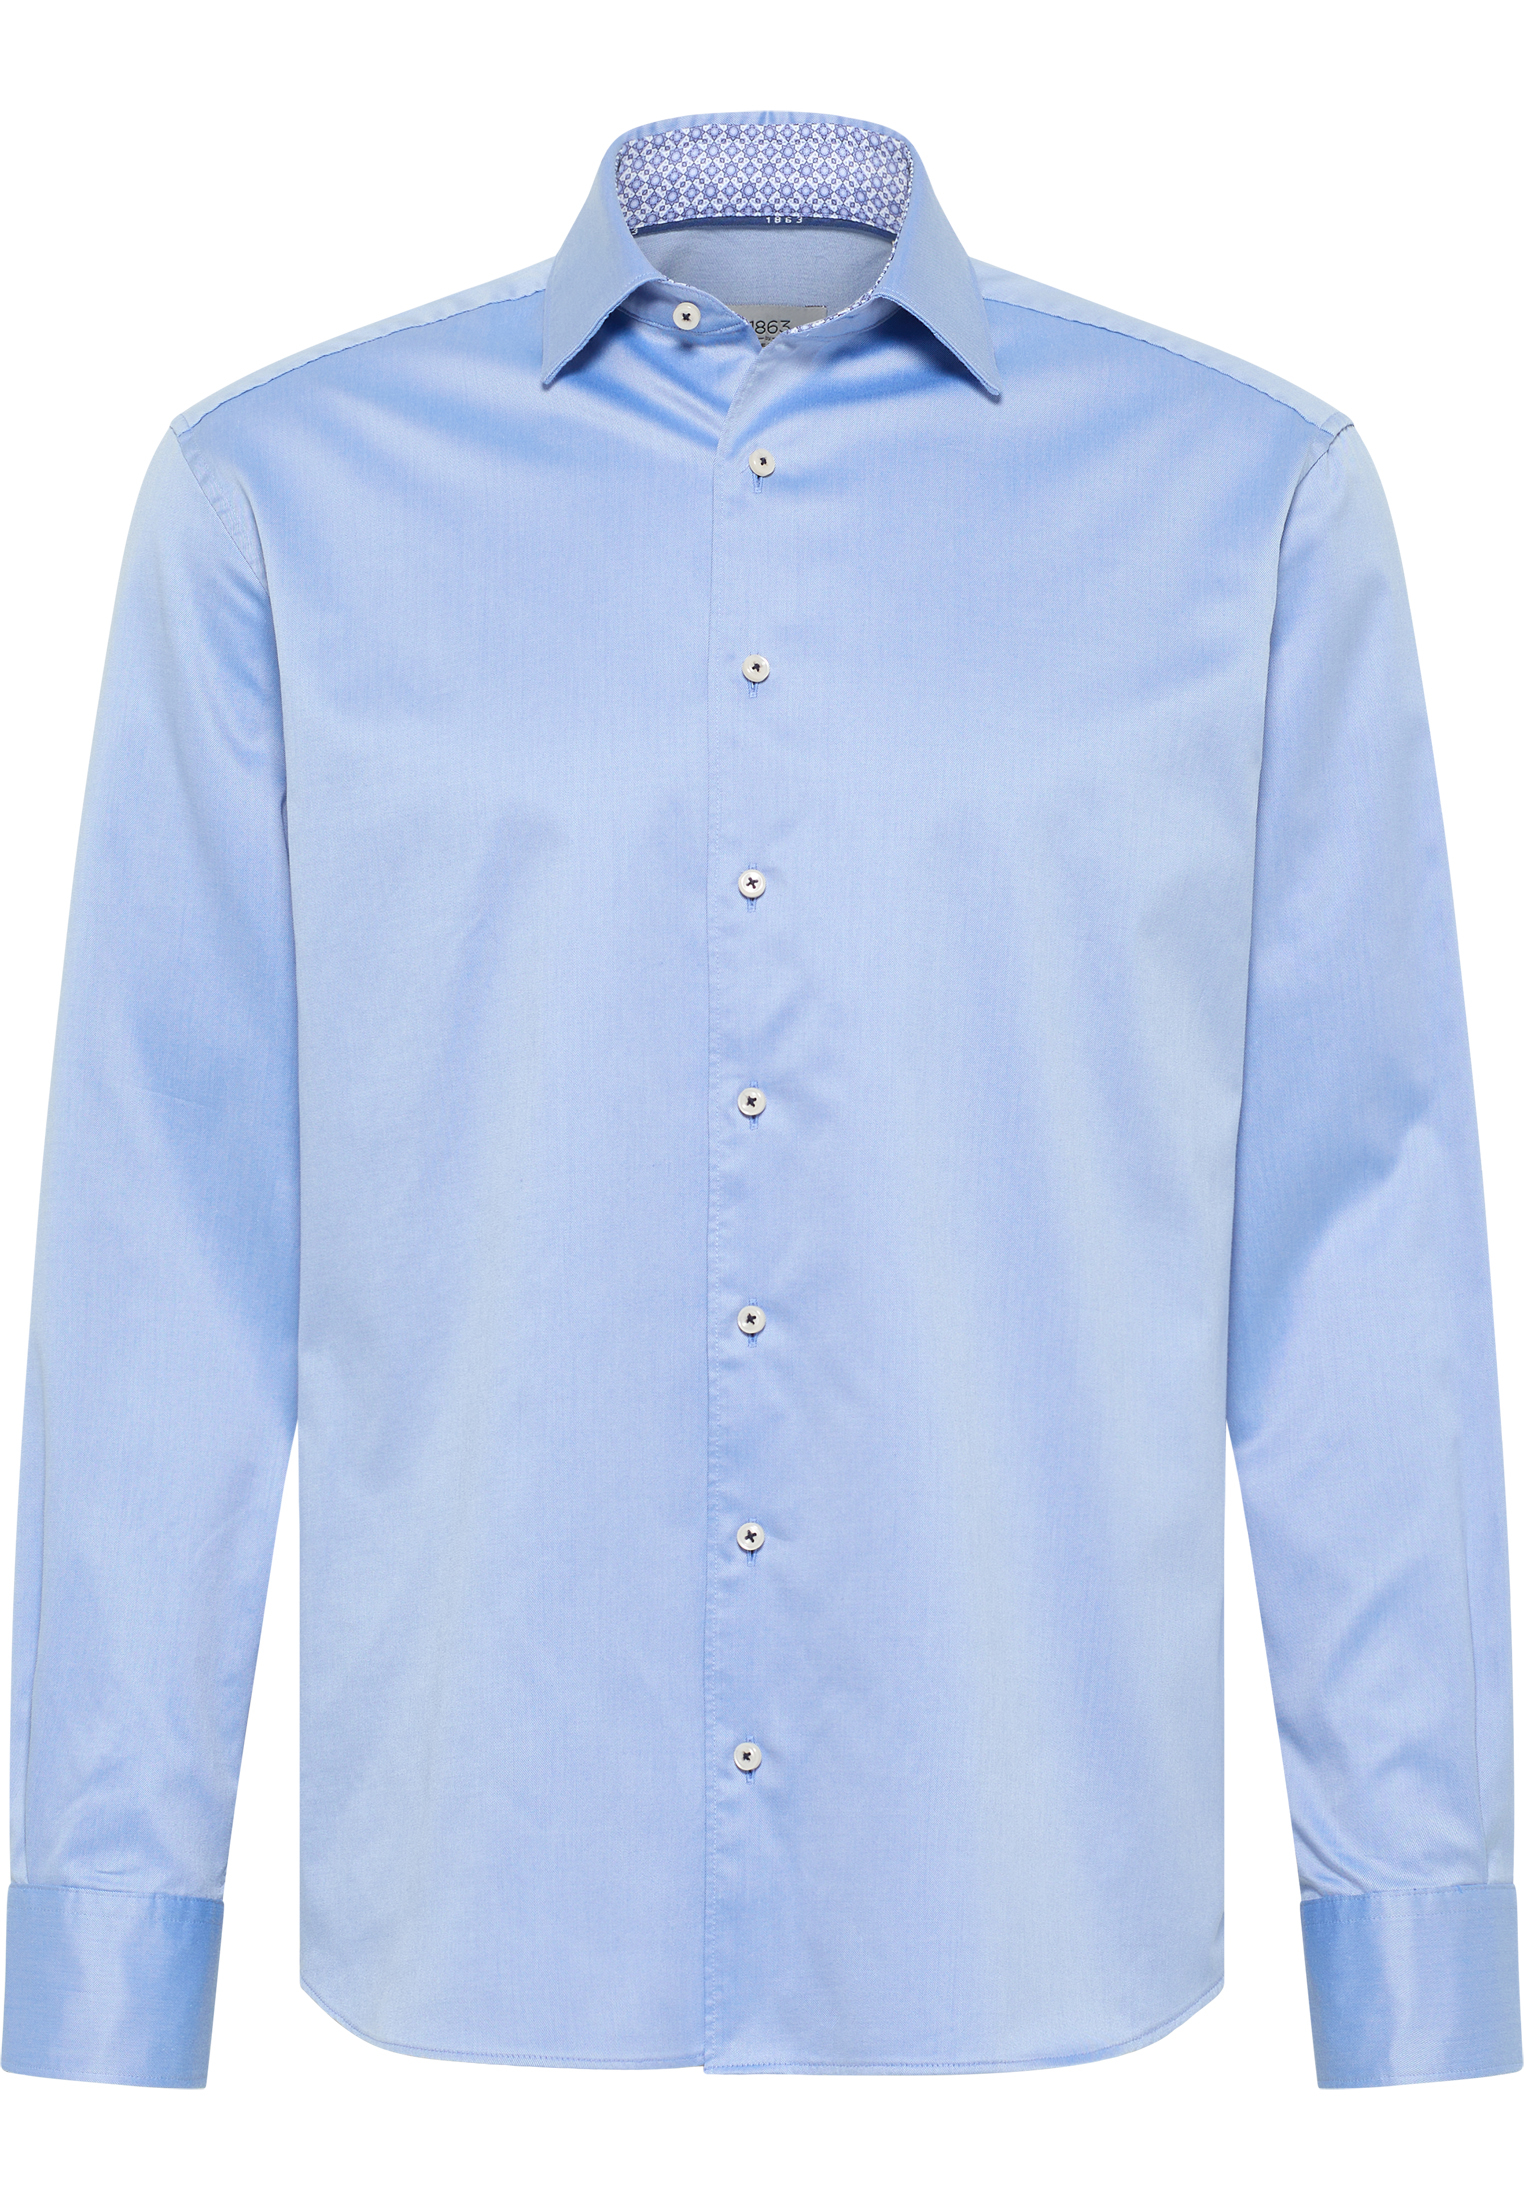 COMFORT FIT Soft Luxury Shirt in mittelblau unifarben